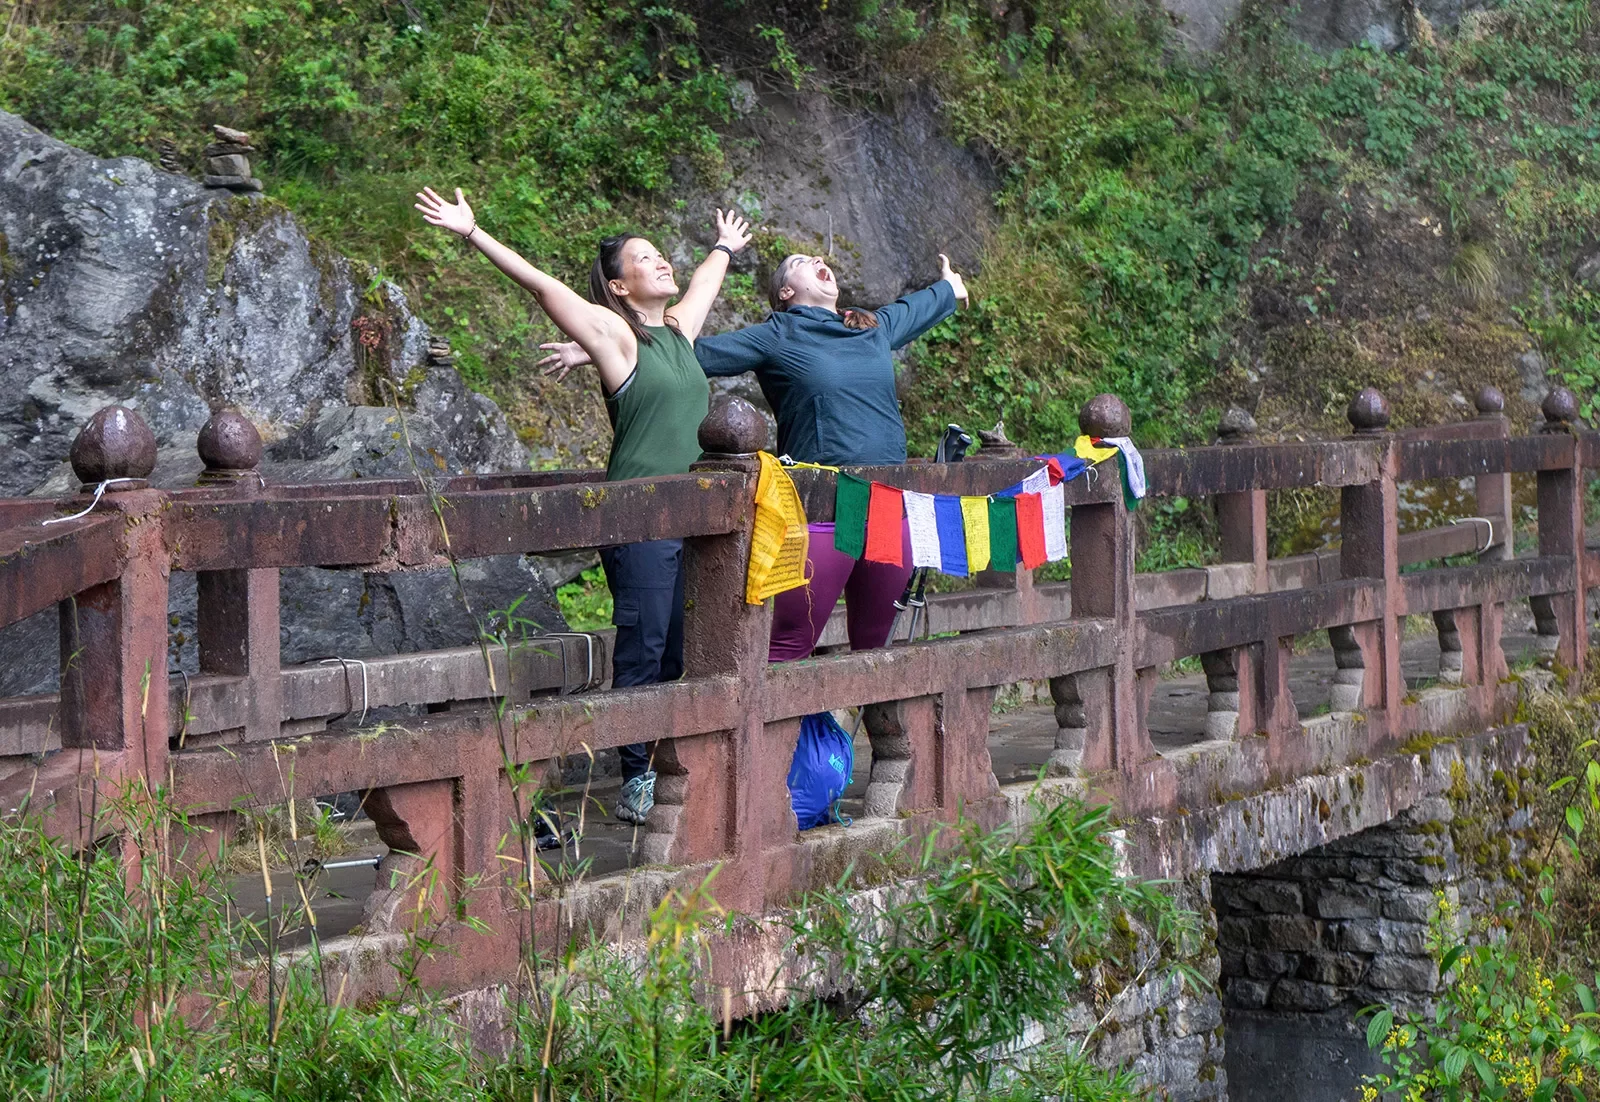 Guests walking across a bridge in Bhutan